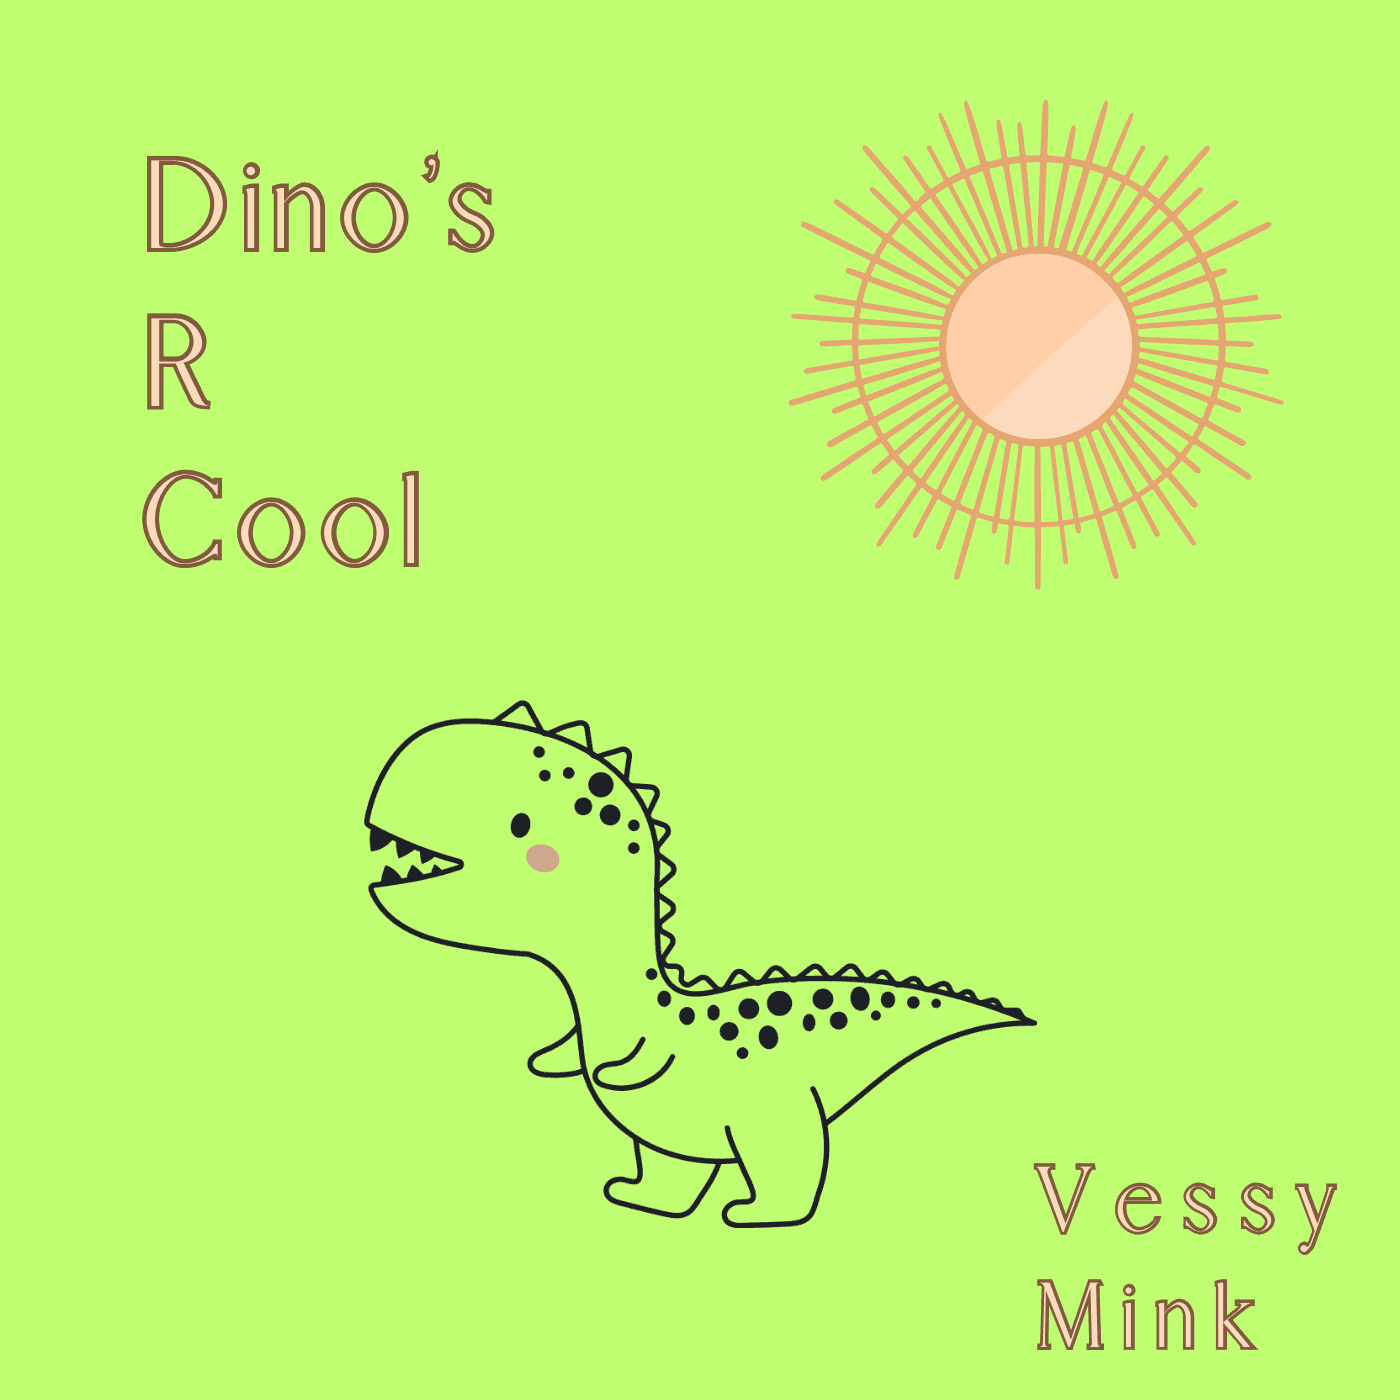 Dino's R Cool